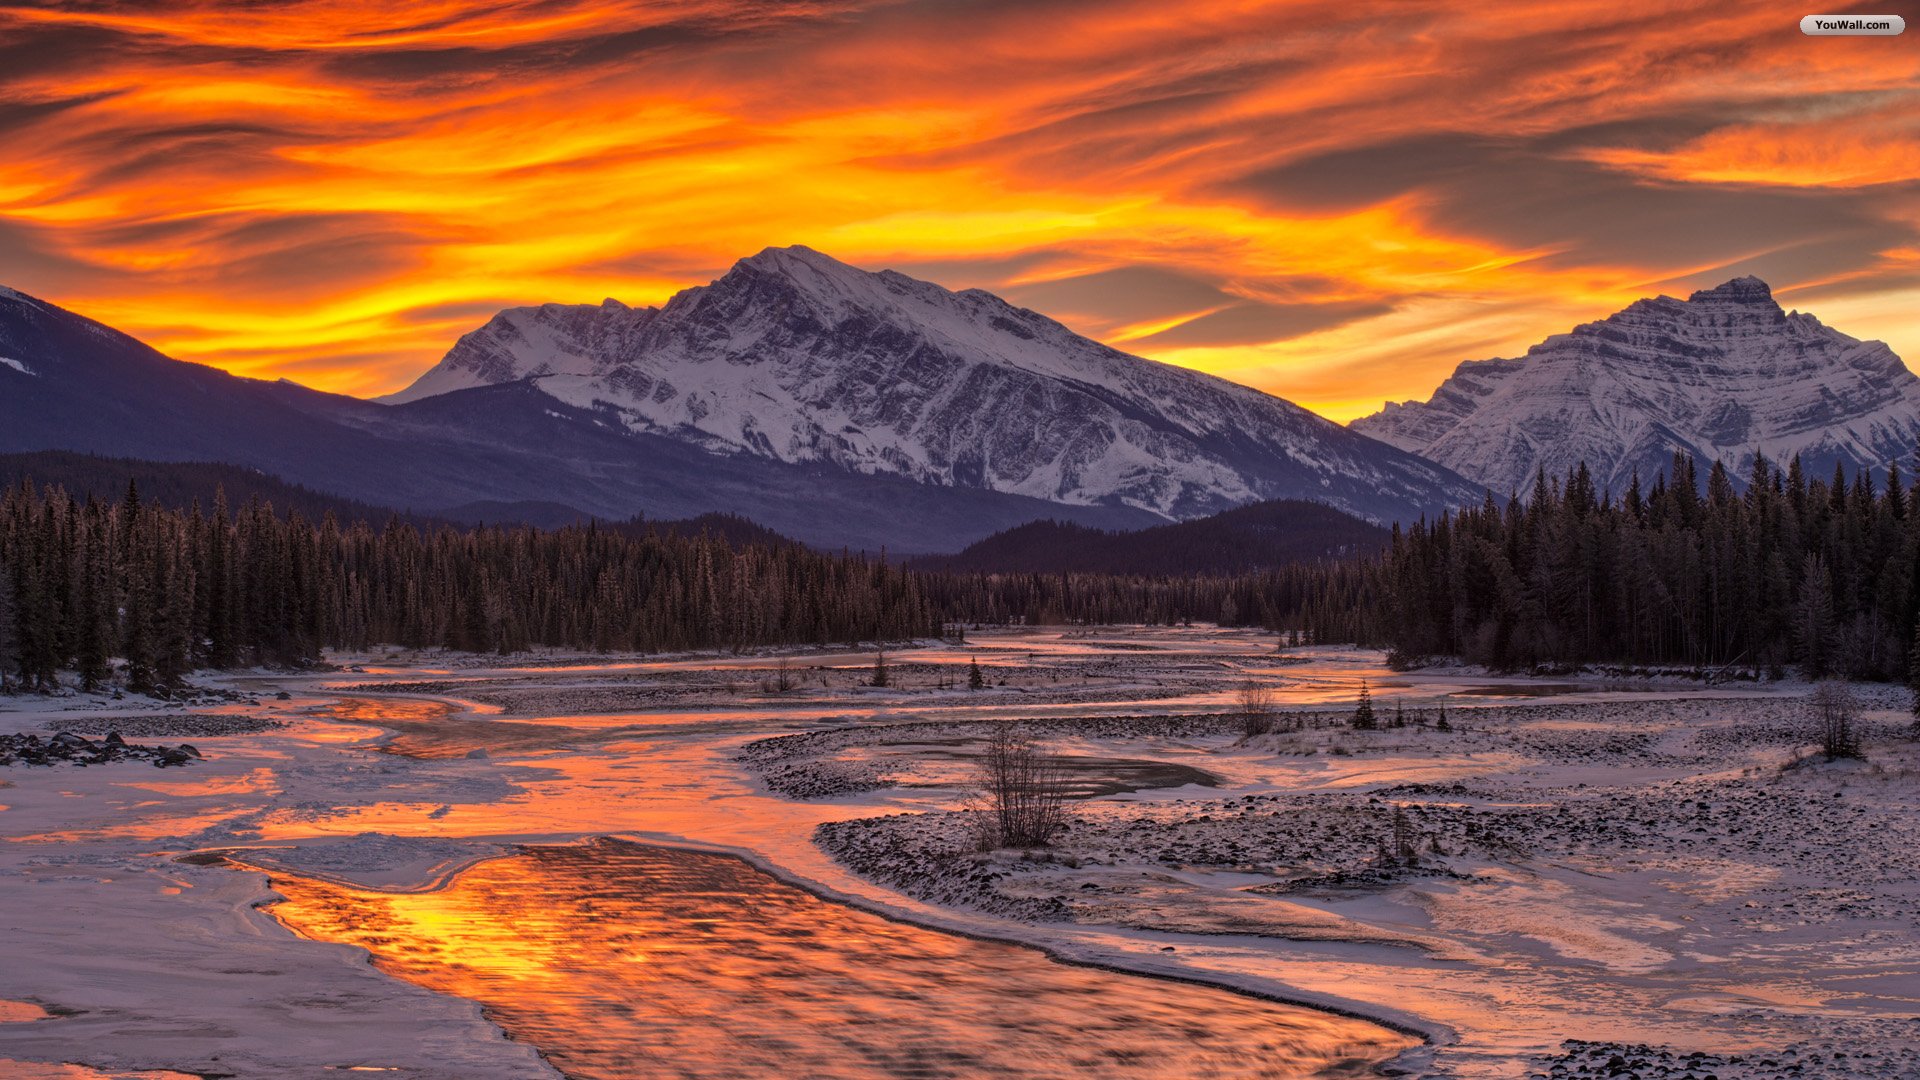 Mountain Sunset HD Wallpaper Background Image